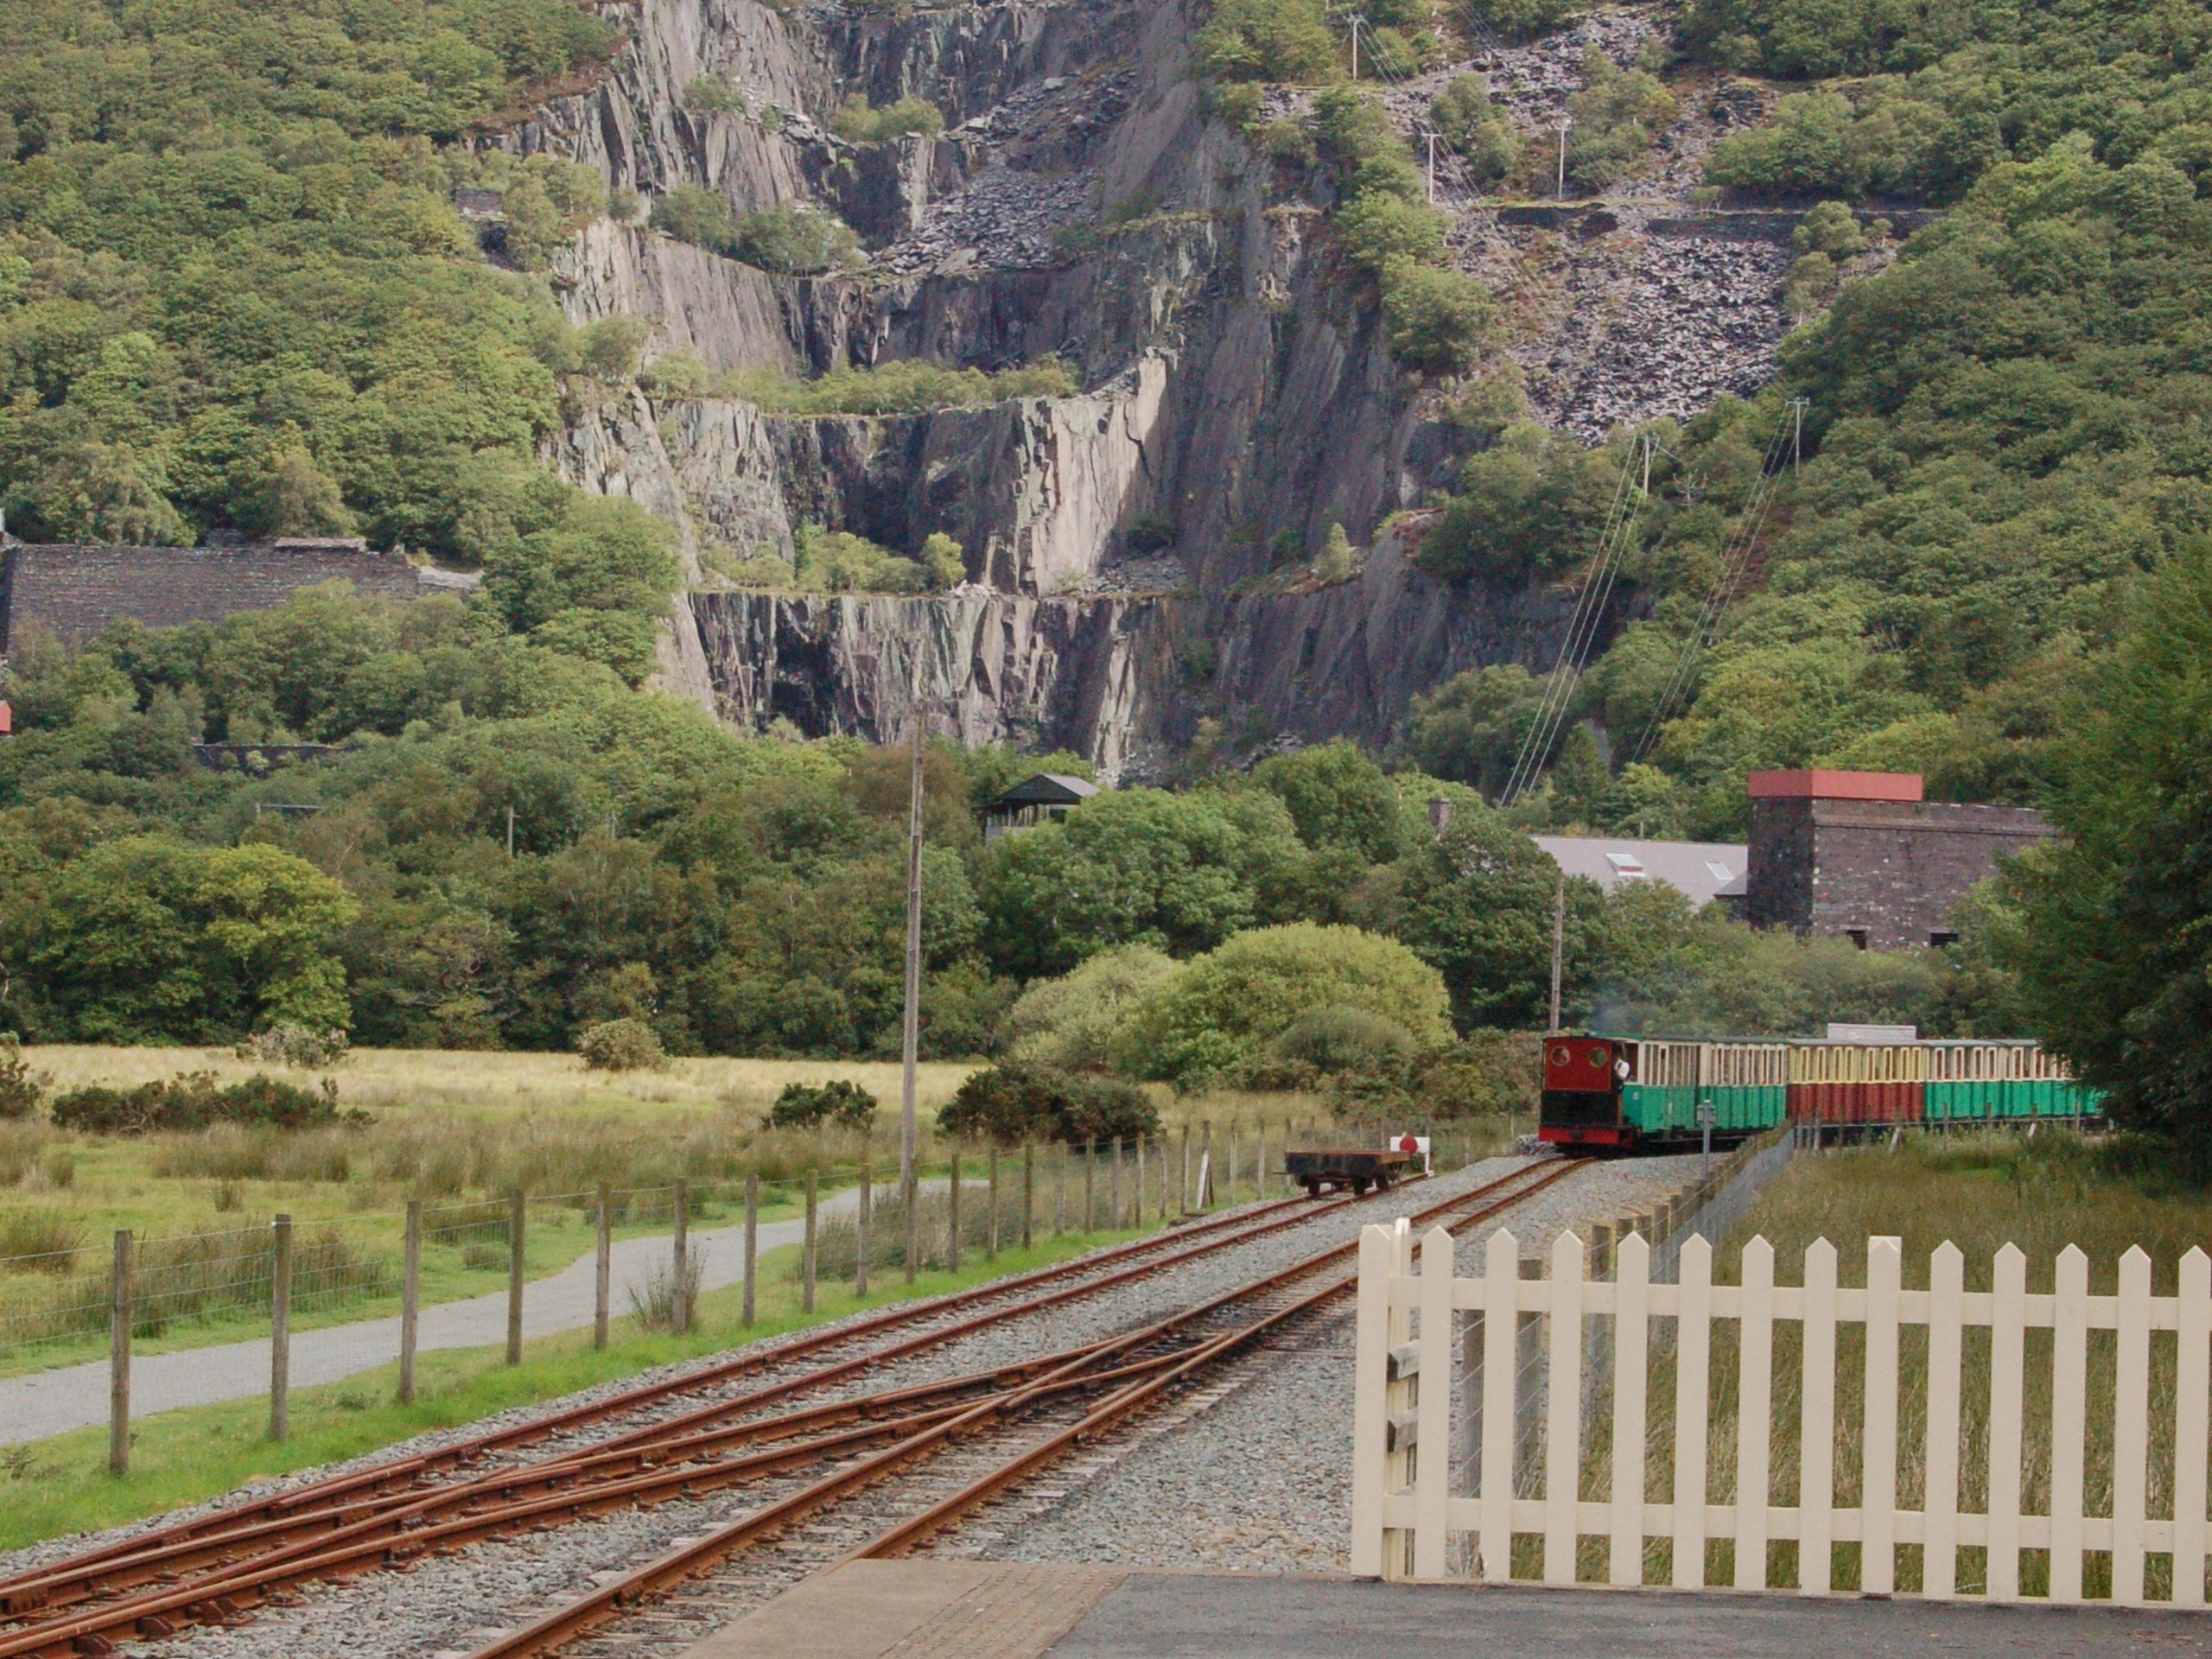 Mine Railway along the Snowdonia Slate walking path